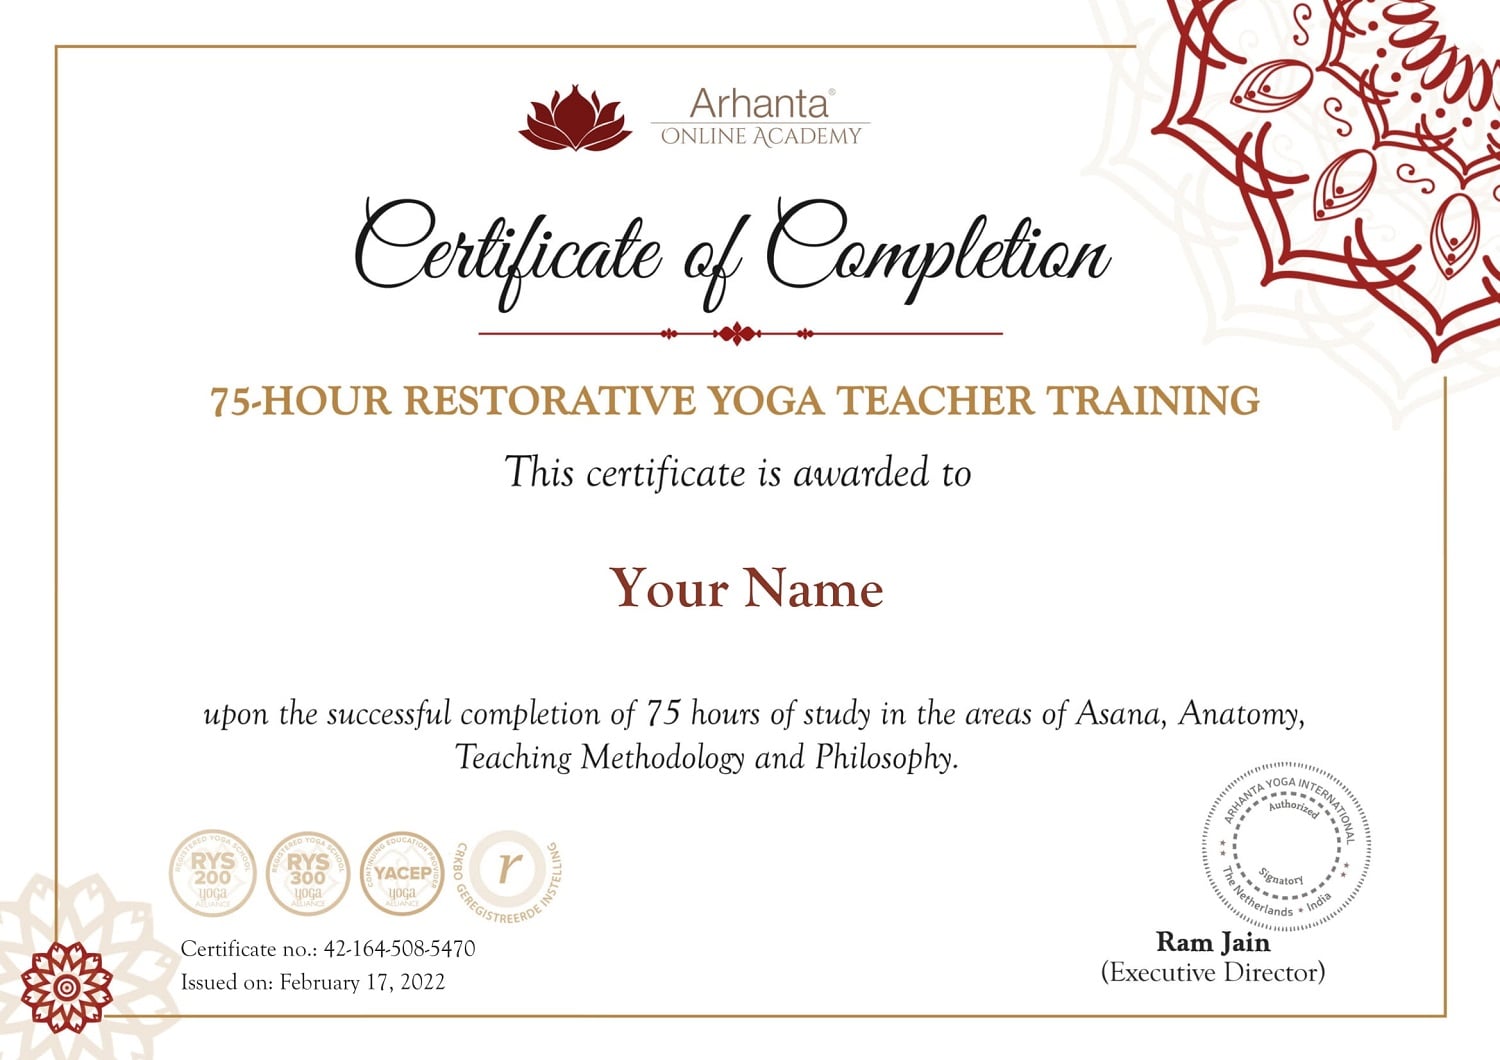 Certificado de formación de Profesores de yoga Restaurativo